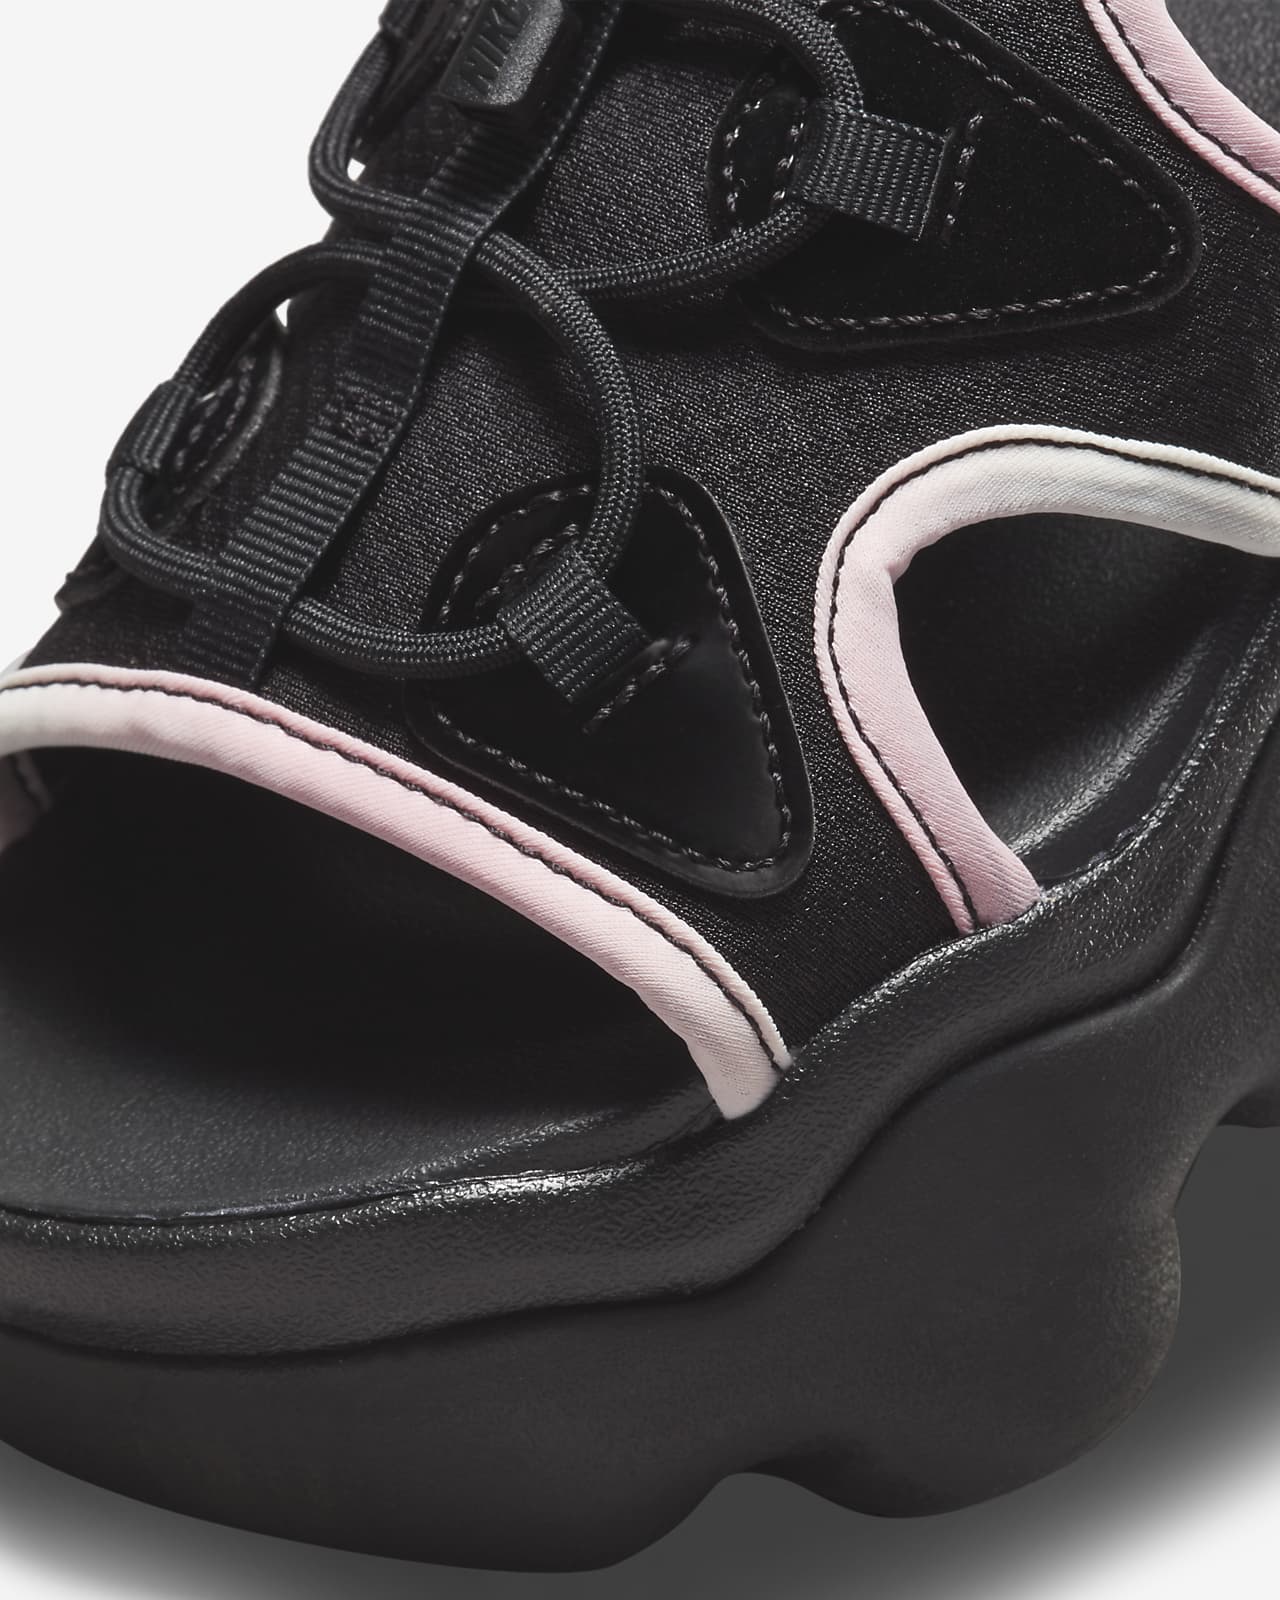 Nike WMNS Air Max Koko Sandal Black/Pink - ideaonline.aero